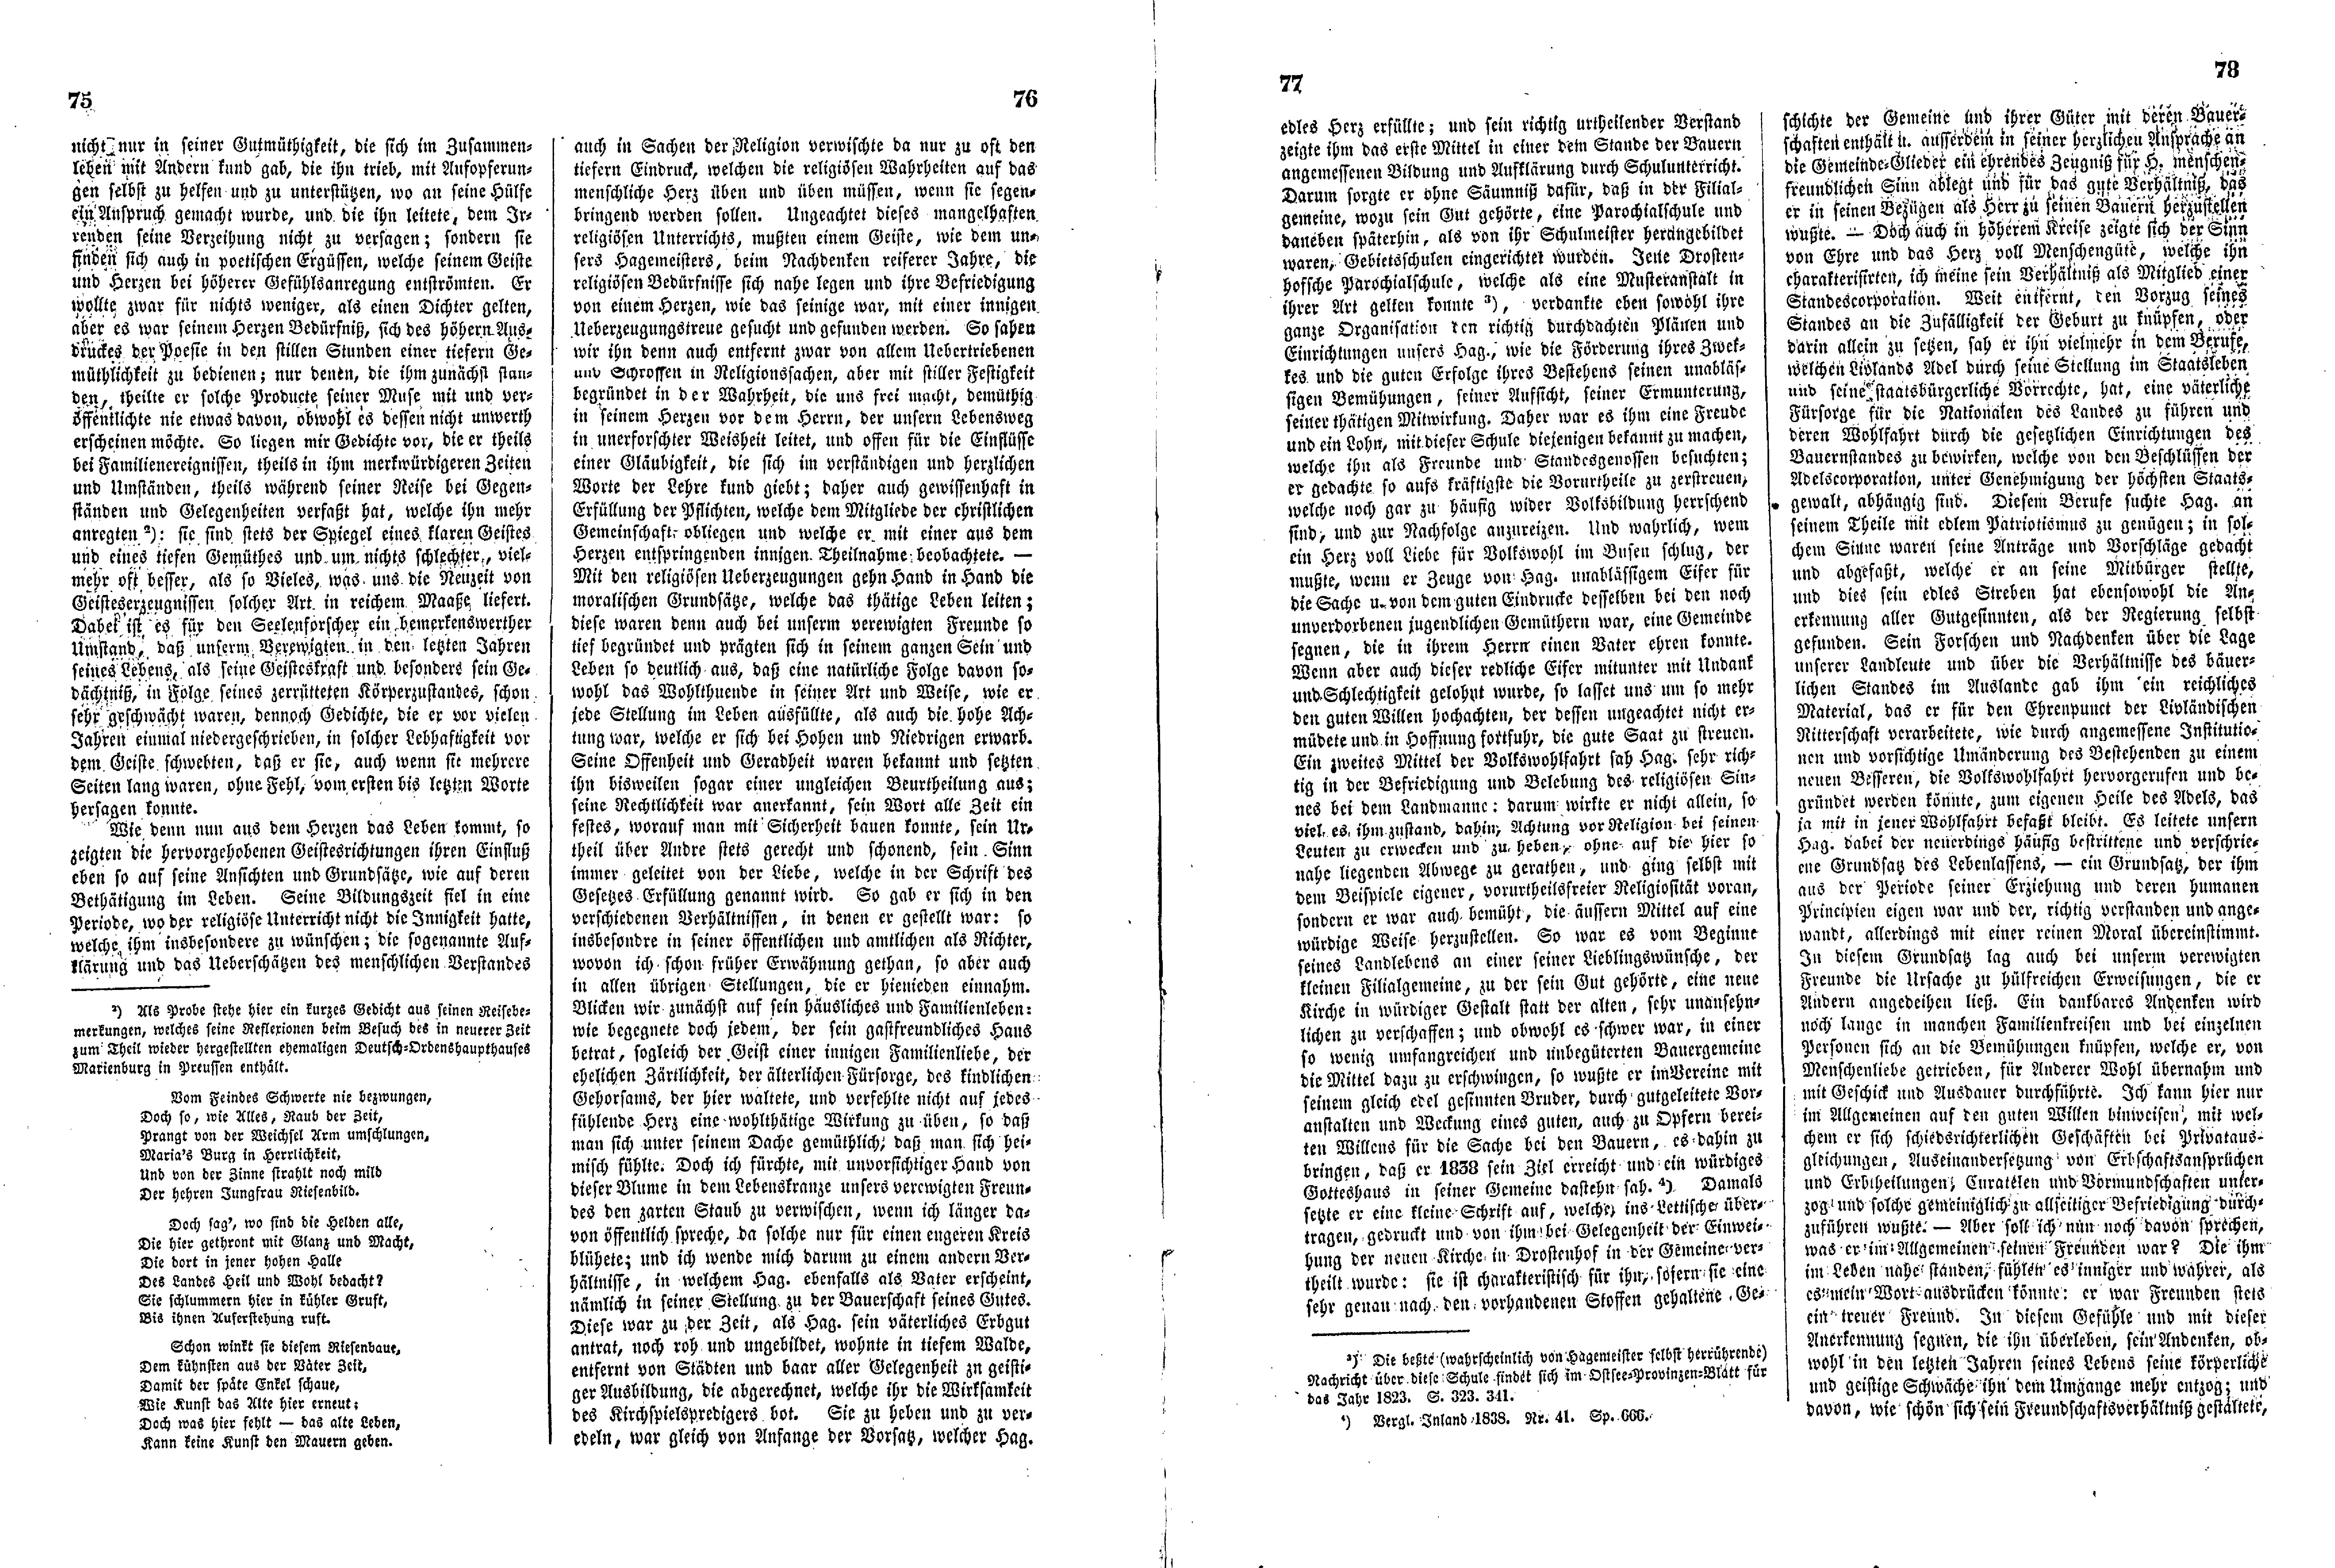 Das Inland [11] (1846) | 24. (75-78) Main body of text